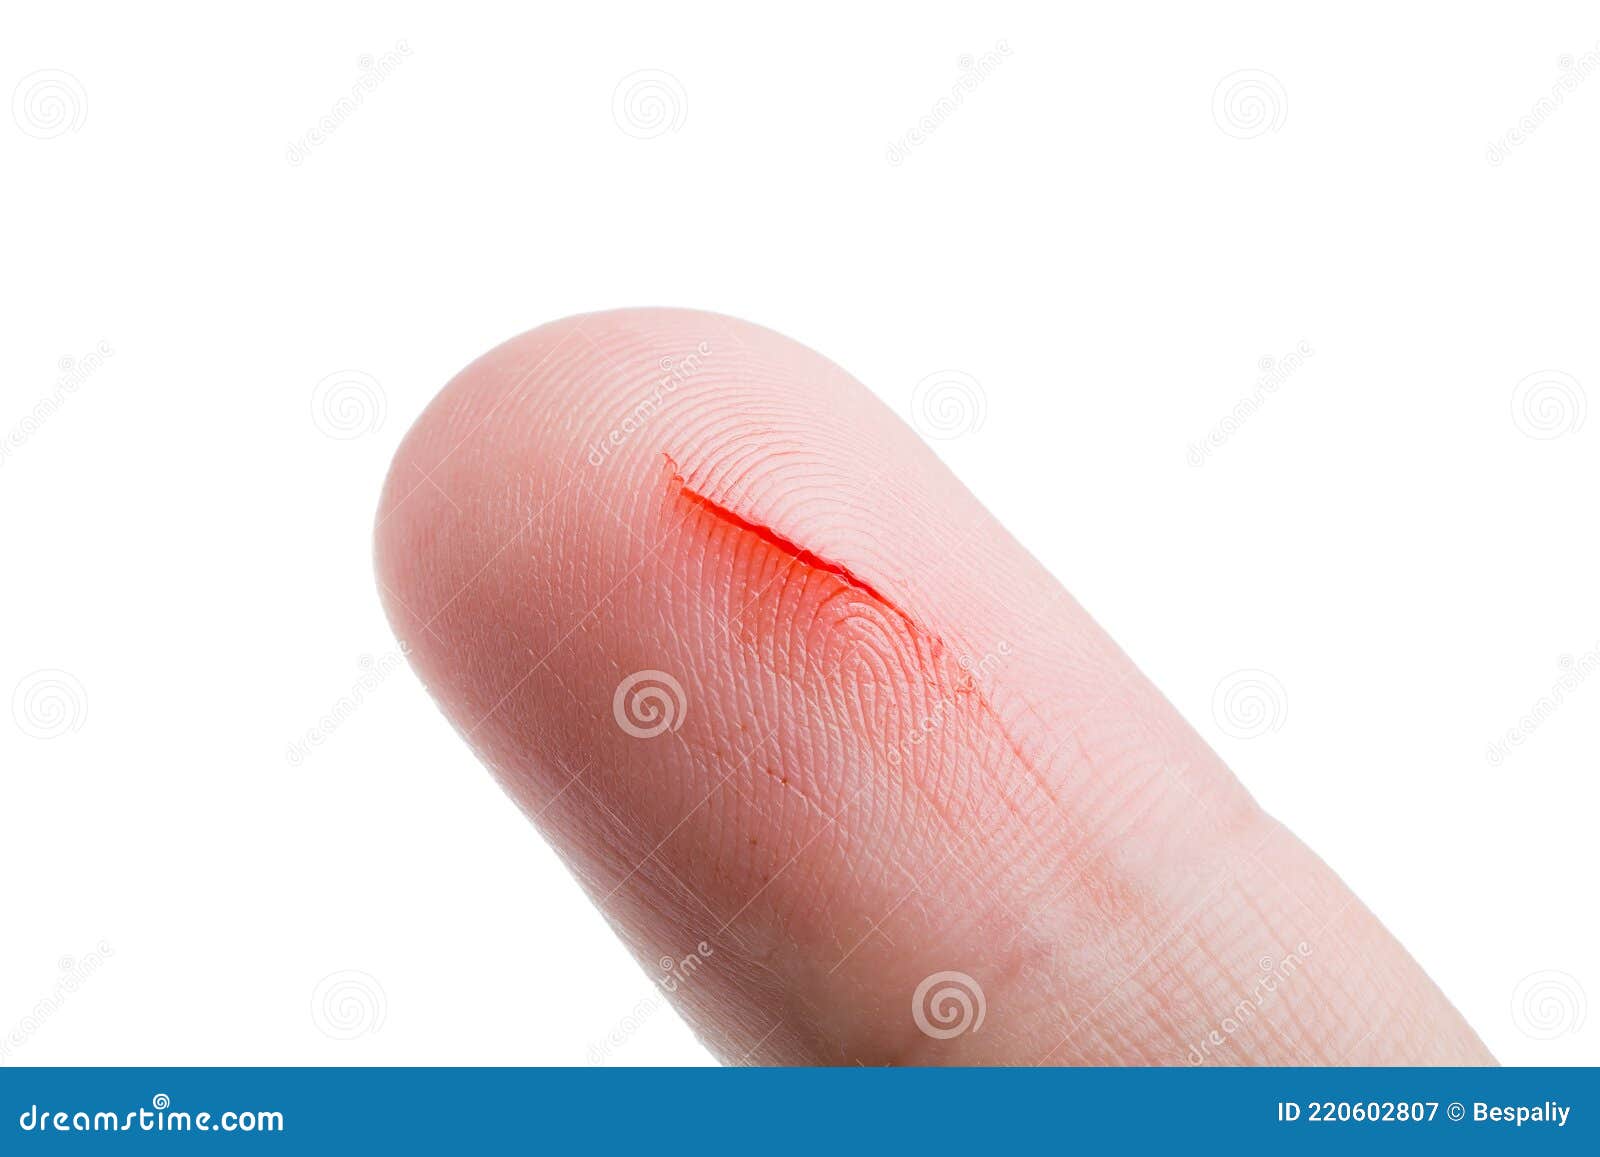 Bleeding Finger Images - Free Download on Freepik